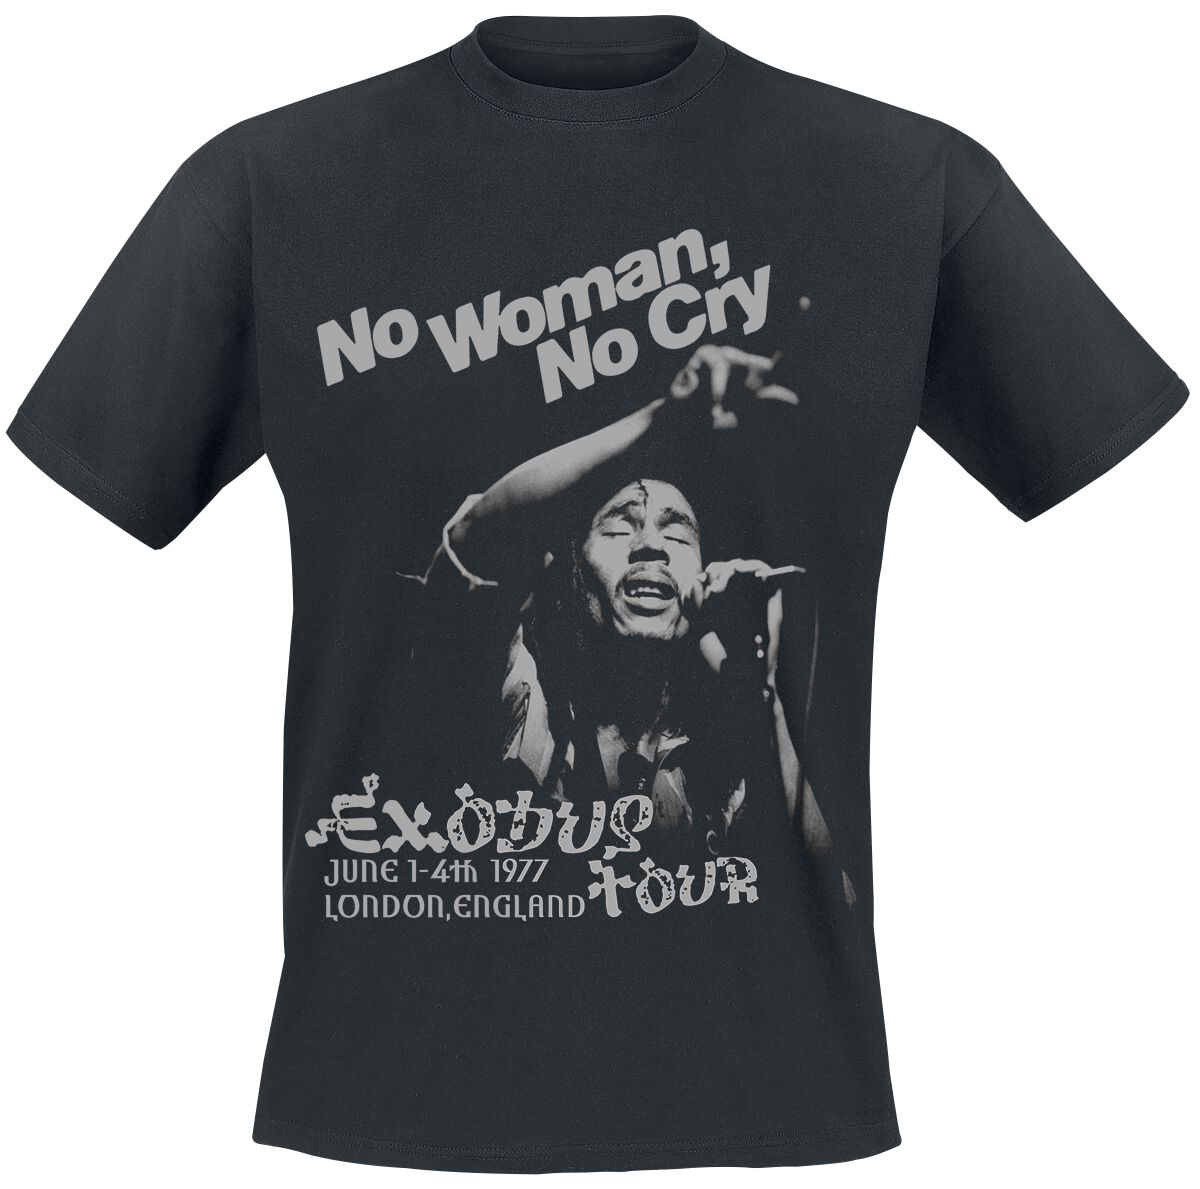 Bob Marley – No woman, no cry